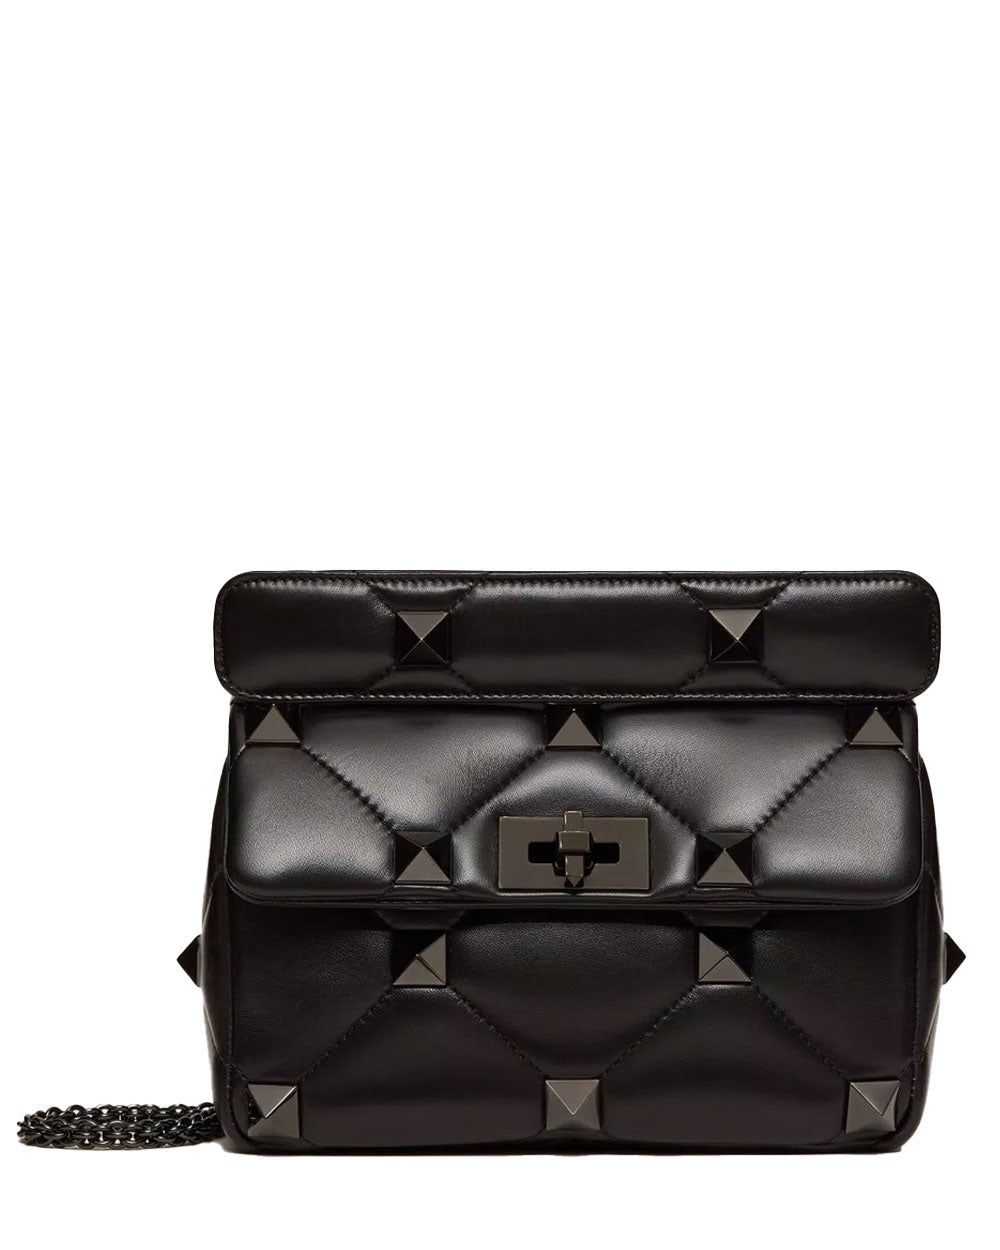 Valentino Garavani Medium Roman Stud Tone-on-Tone Shoulder Bag in Black Korshak